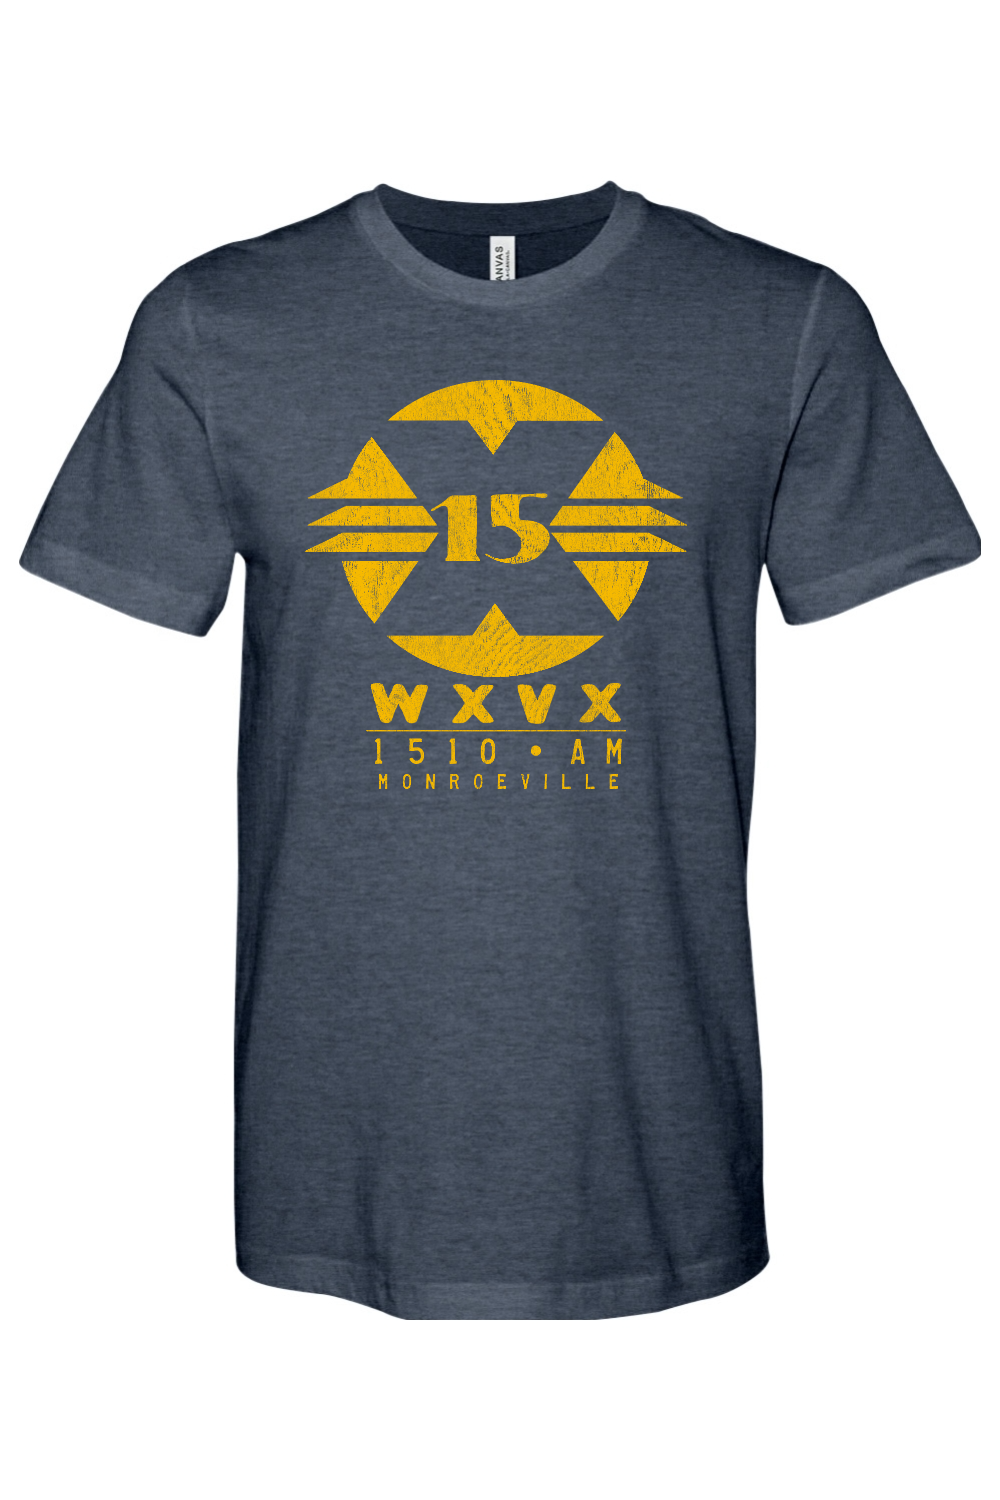 X-15 - WXVX - AM 1510 - Monroeville, PA - Yinzylvania